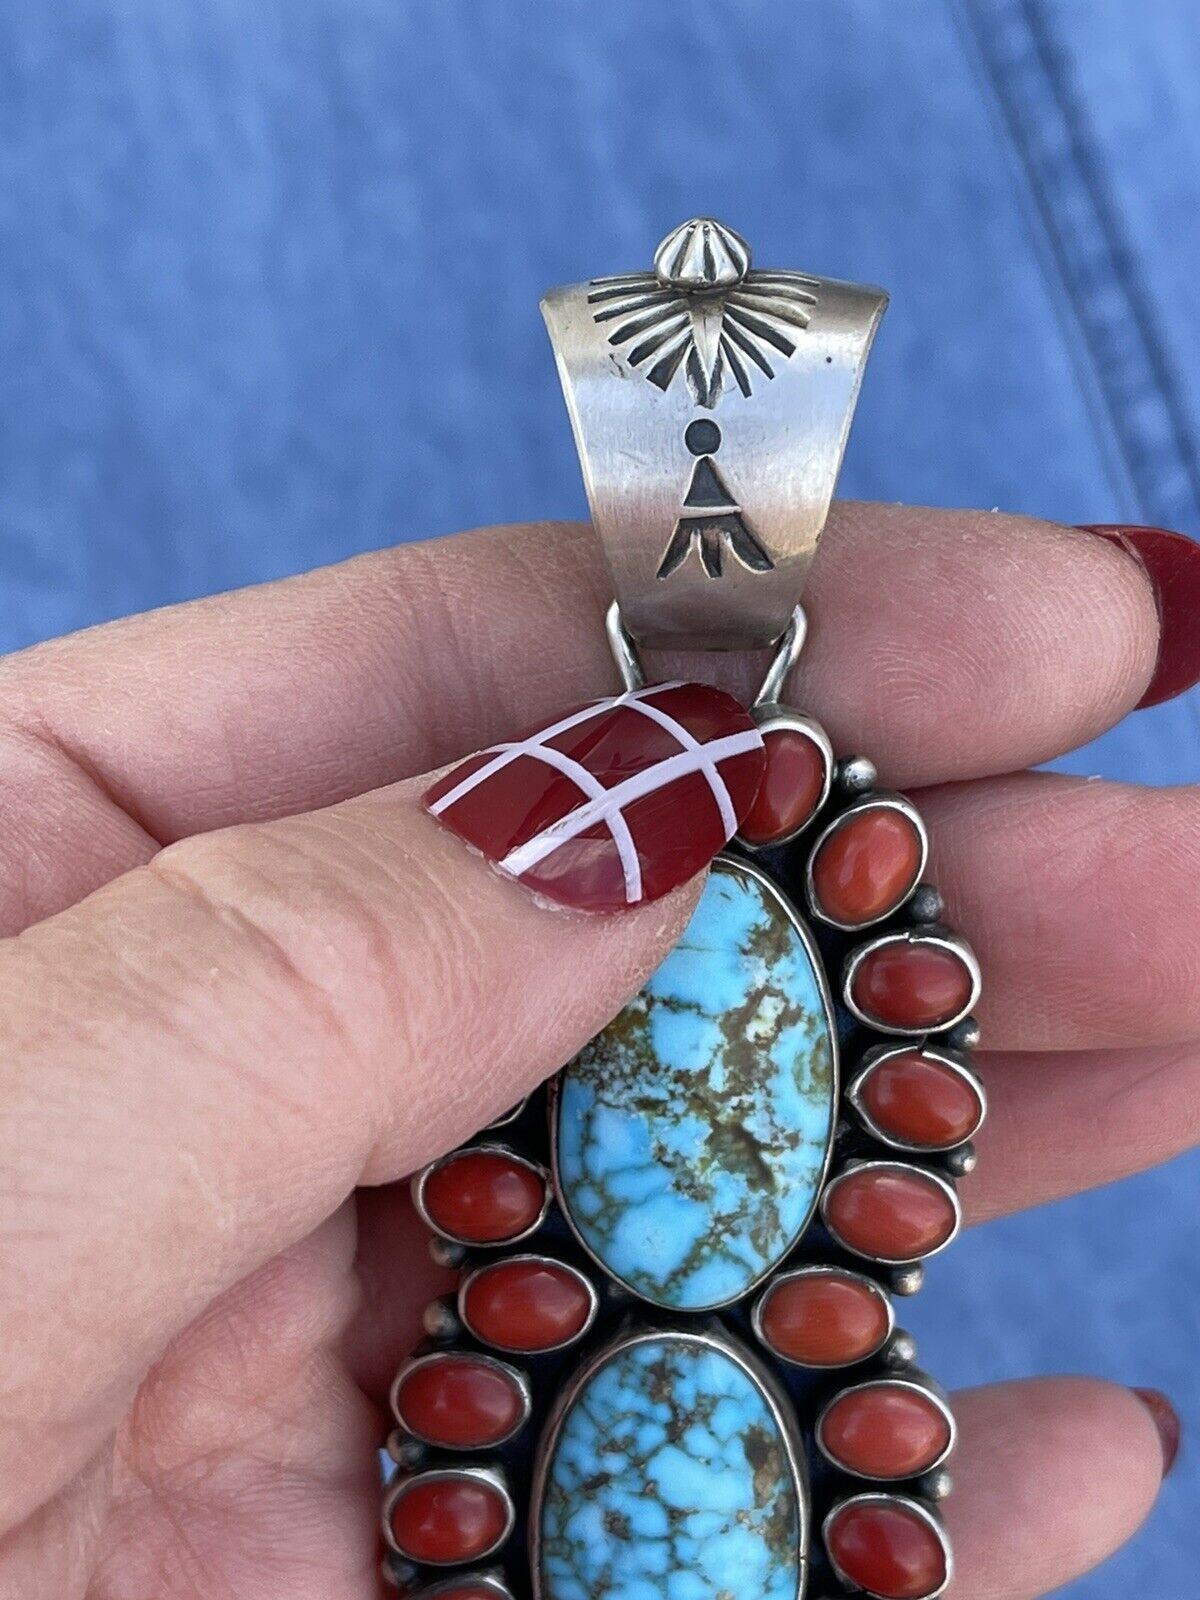 Navajo Sterling 2 Stone Kingman Web Turquoise & Red Coral Taos Pendant